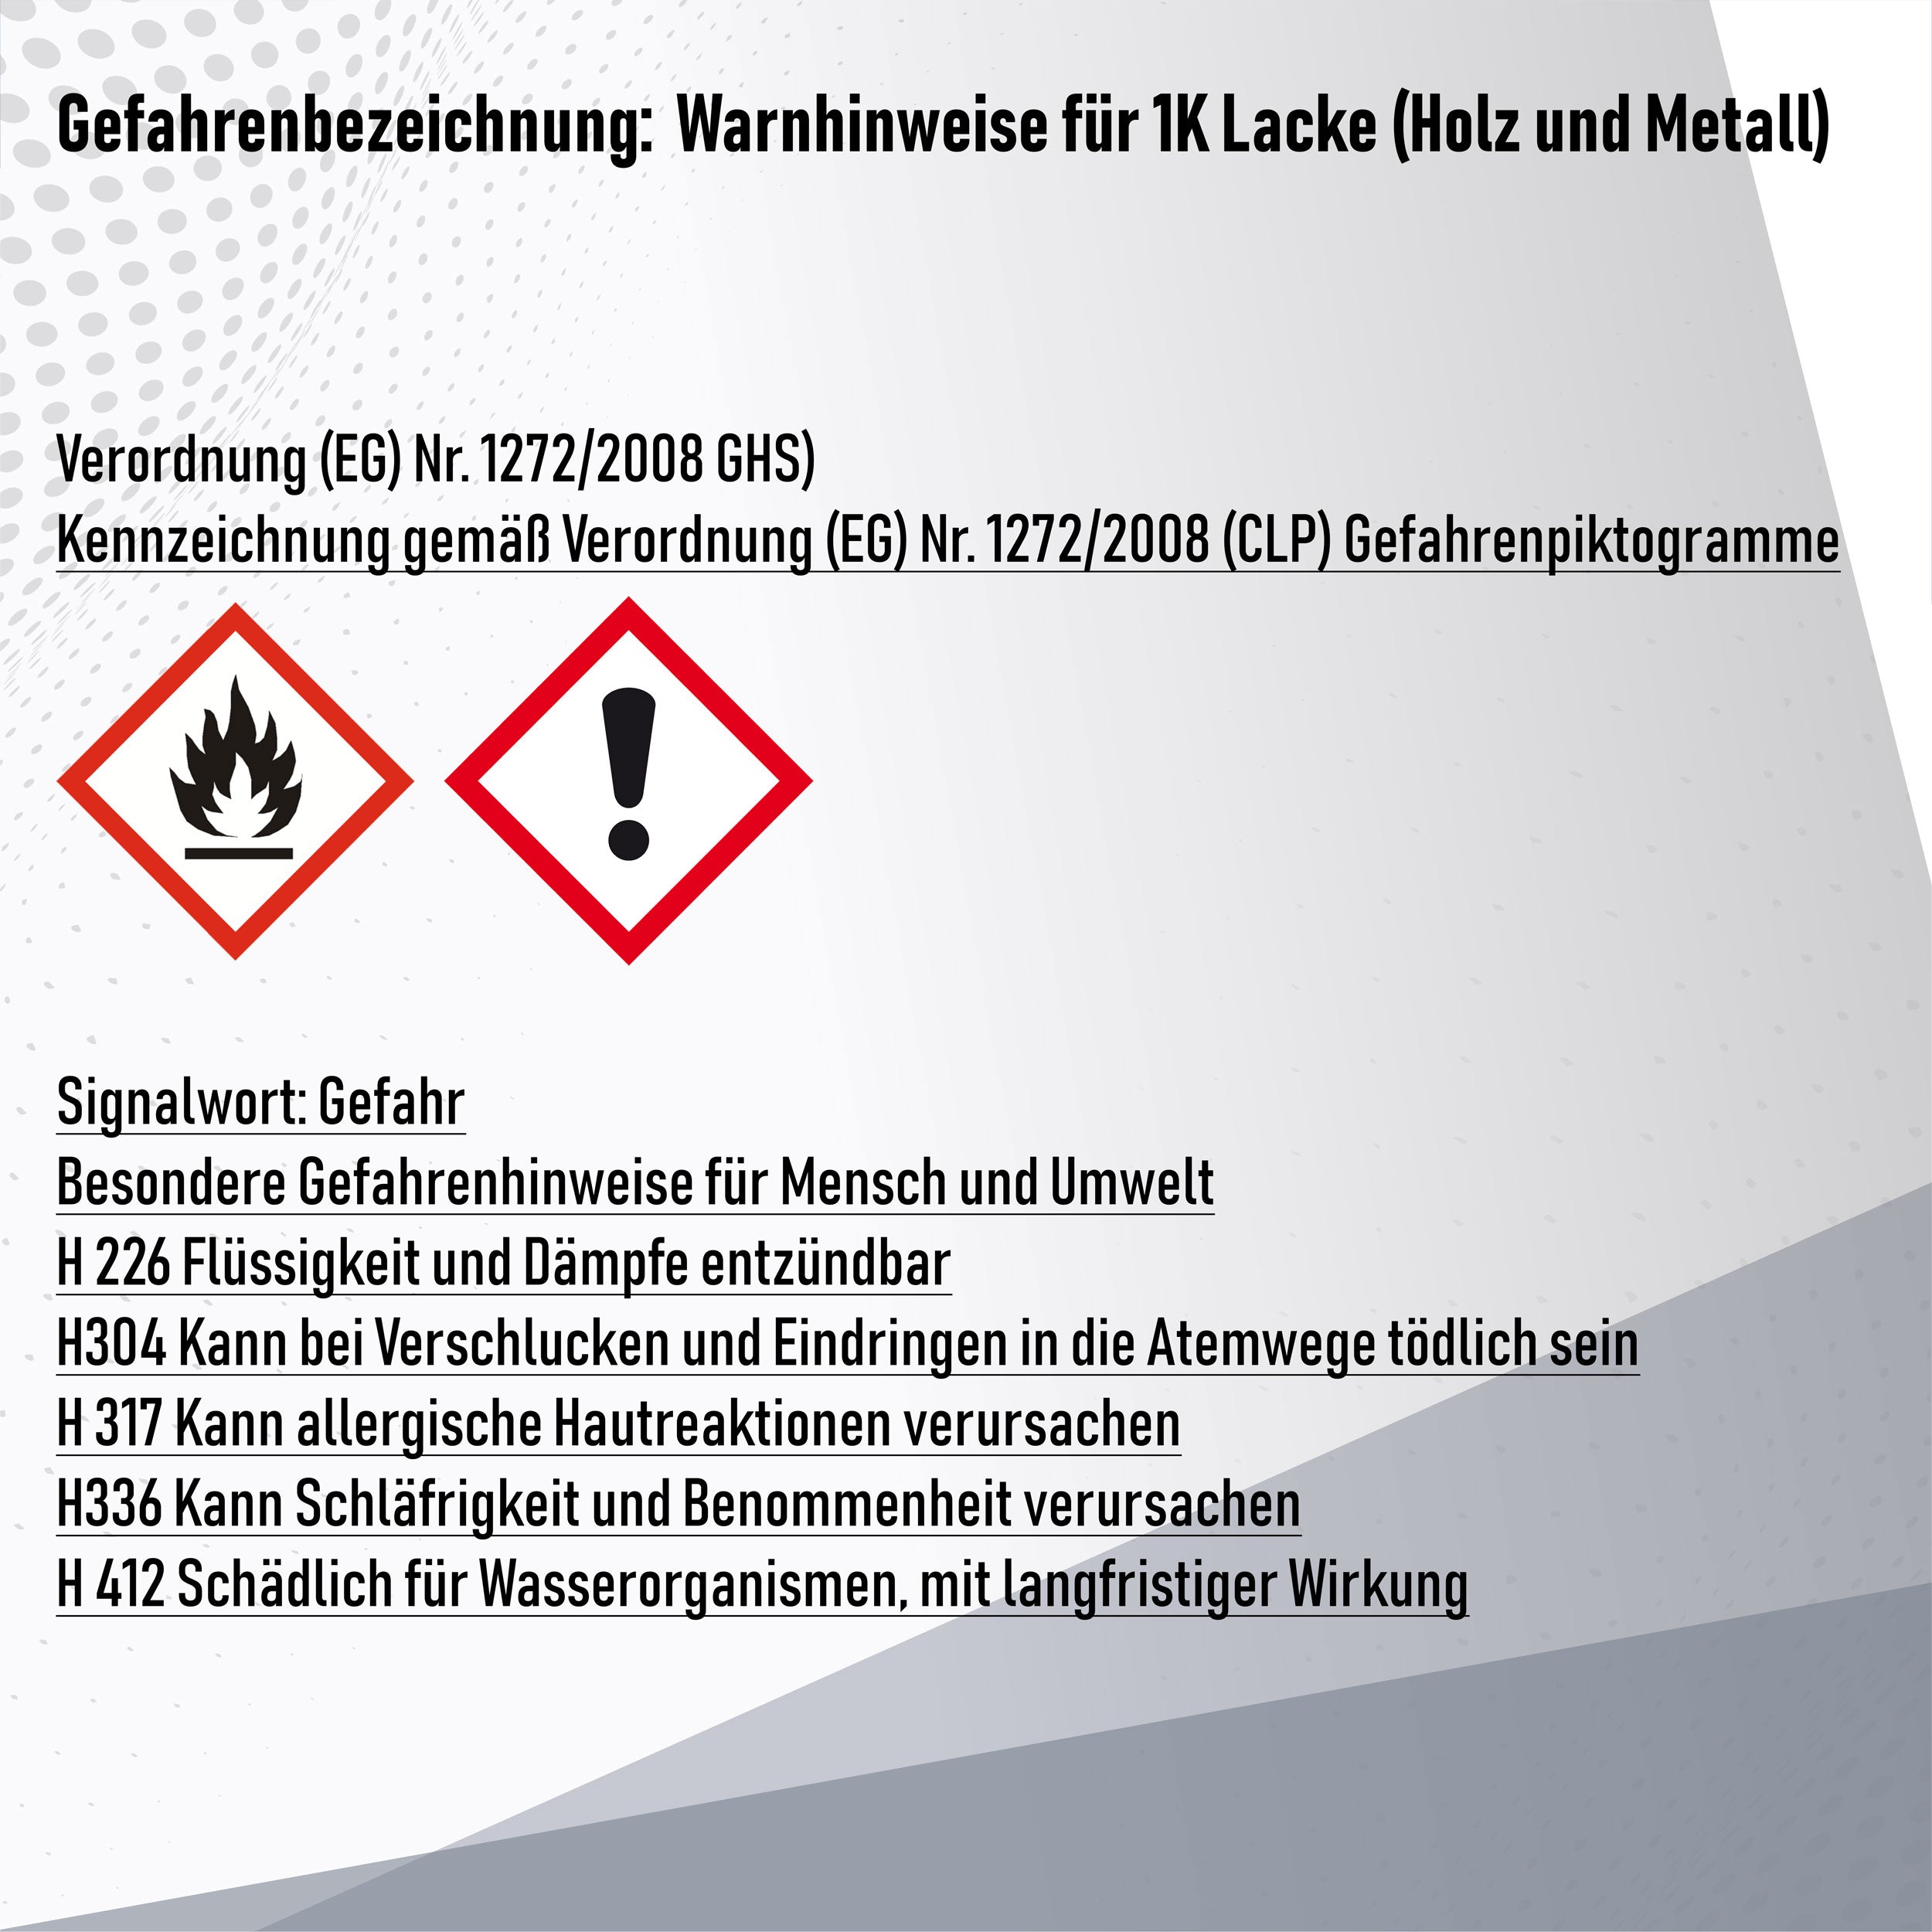 Buntlack RAL 1034 Pastellgelb- Holzlack Holzfarbe Metallfarbe Lausitzer Farbwerke